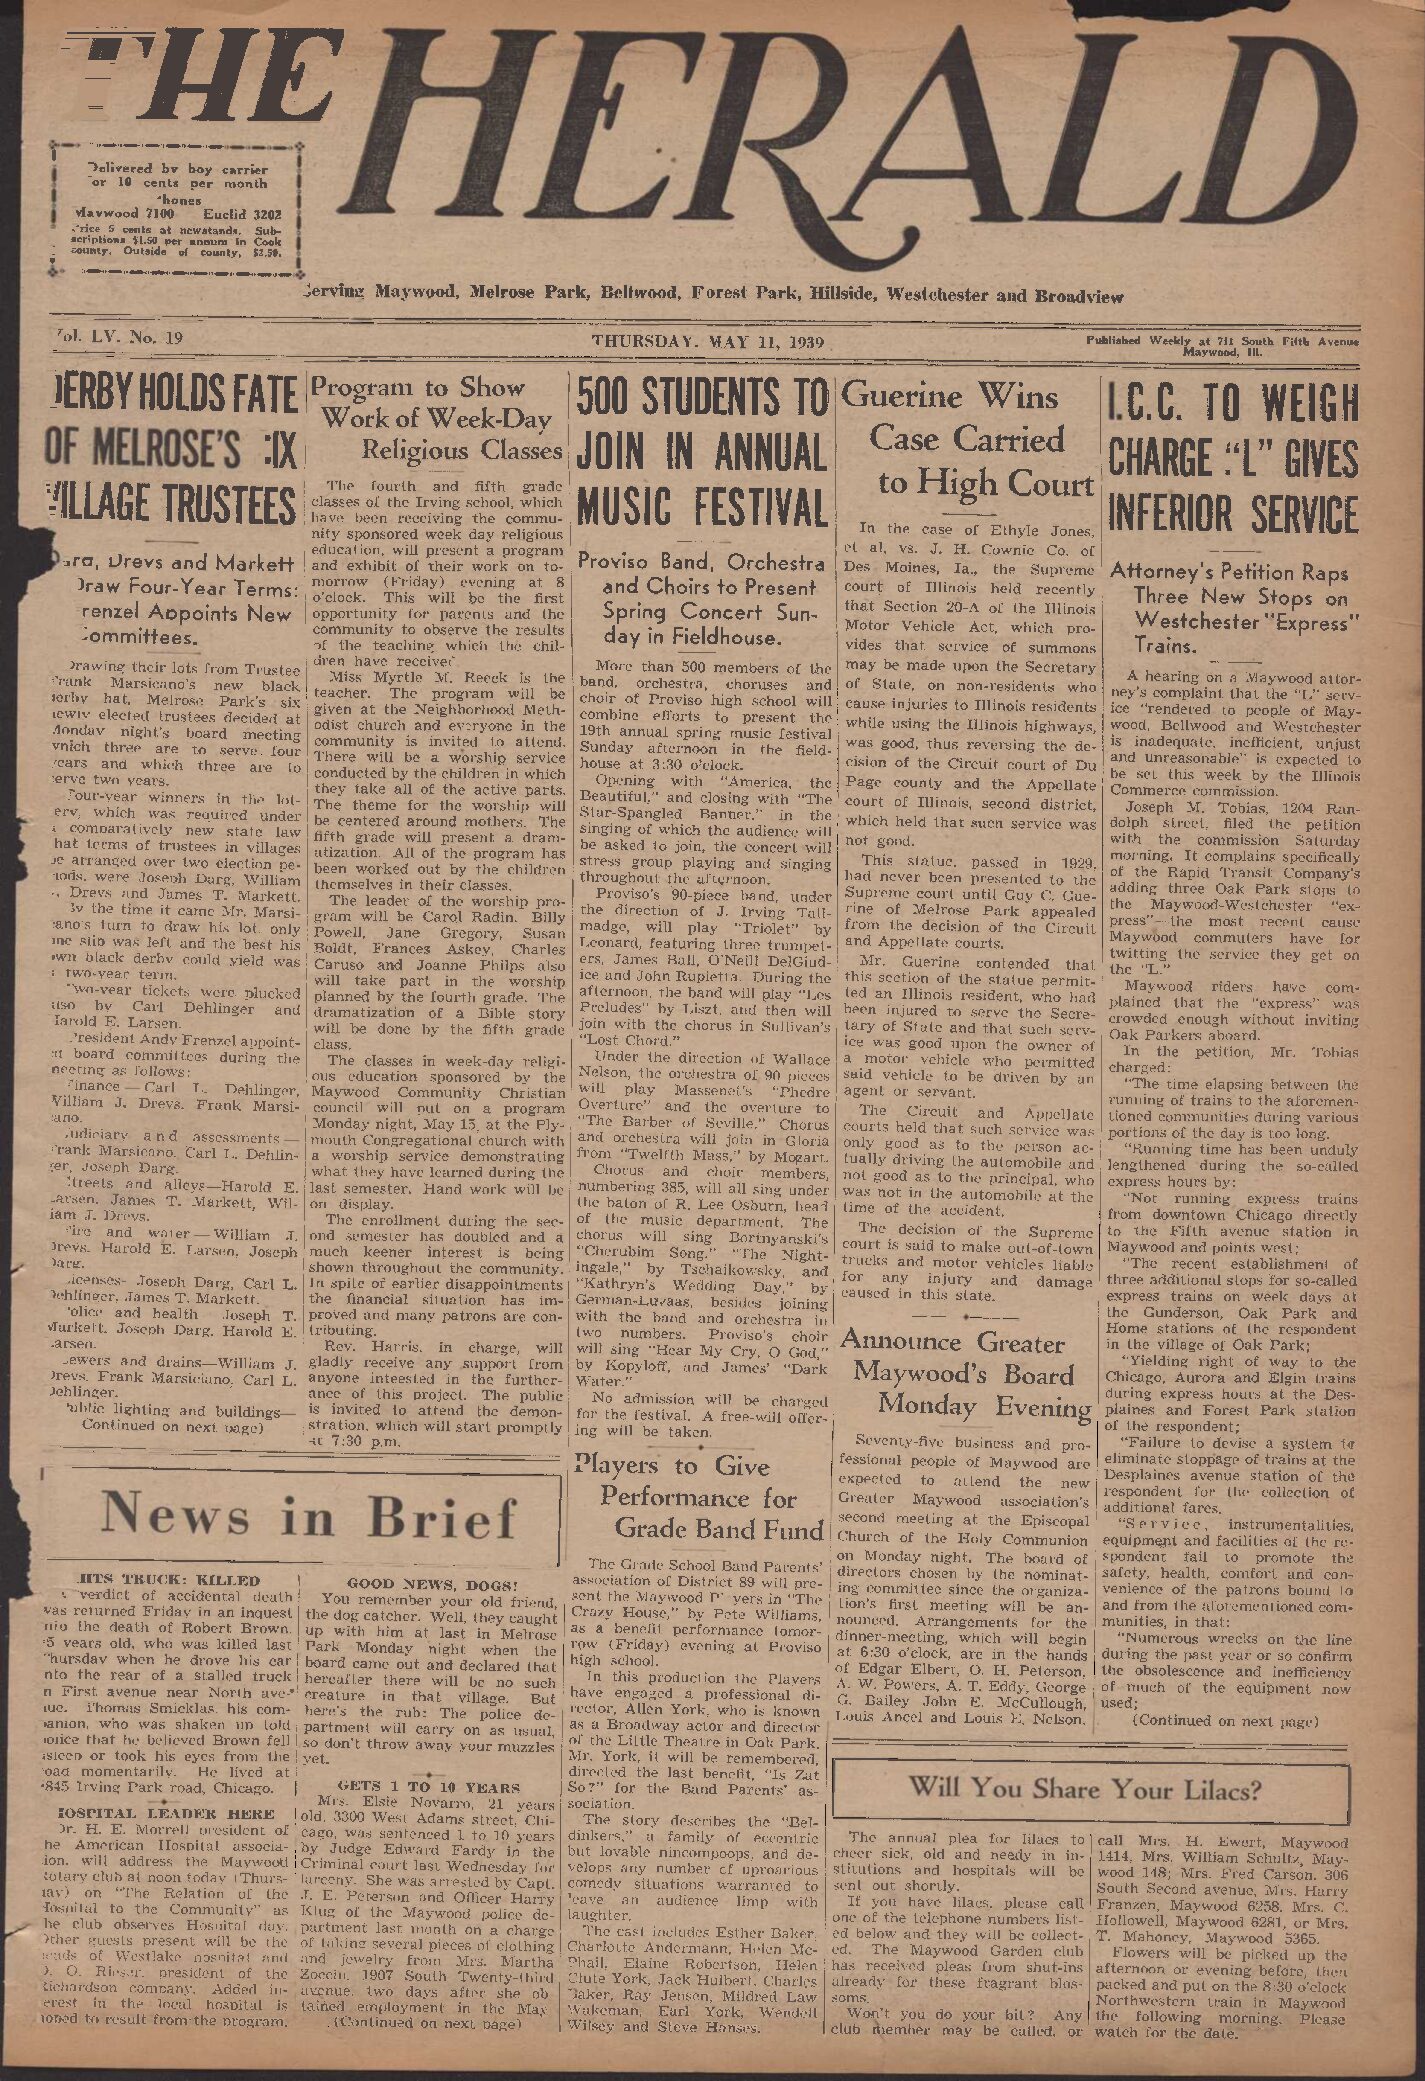 The Herald – 19390511